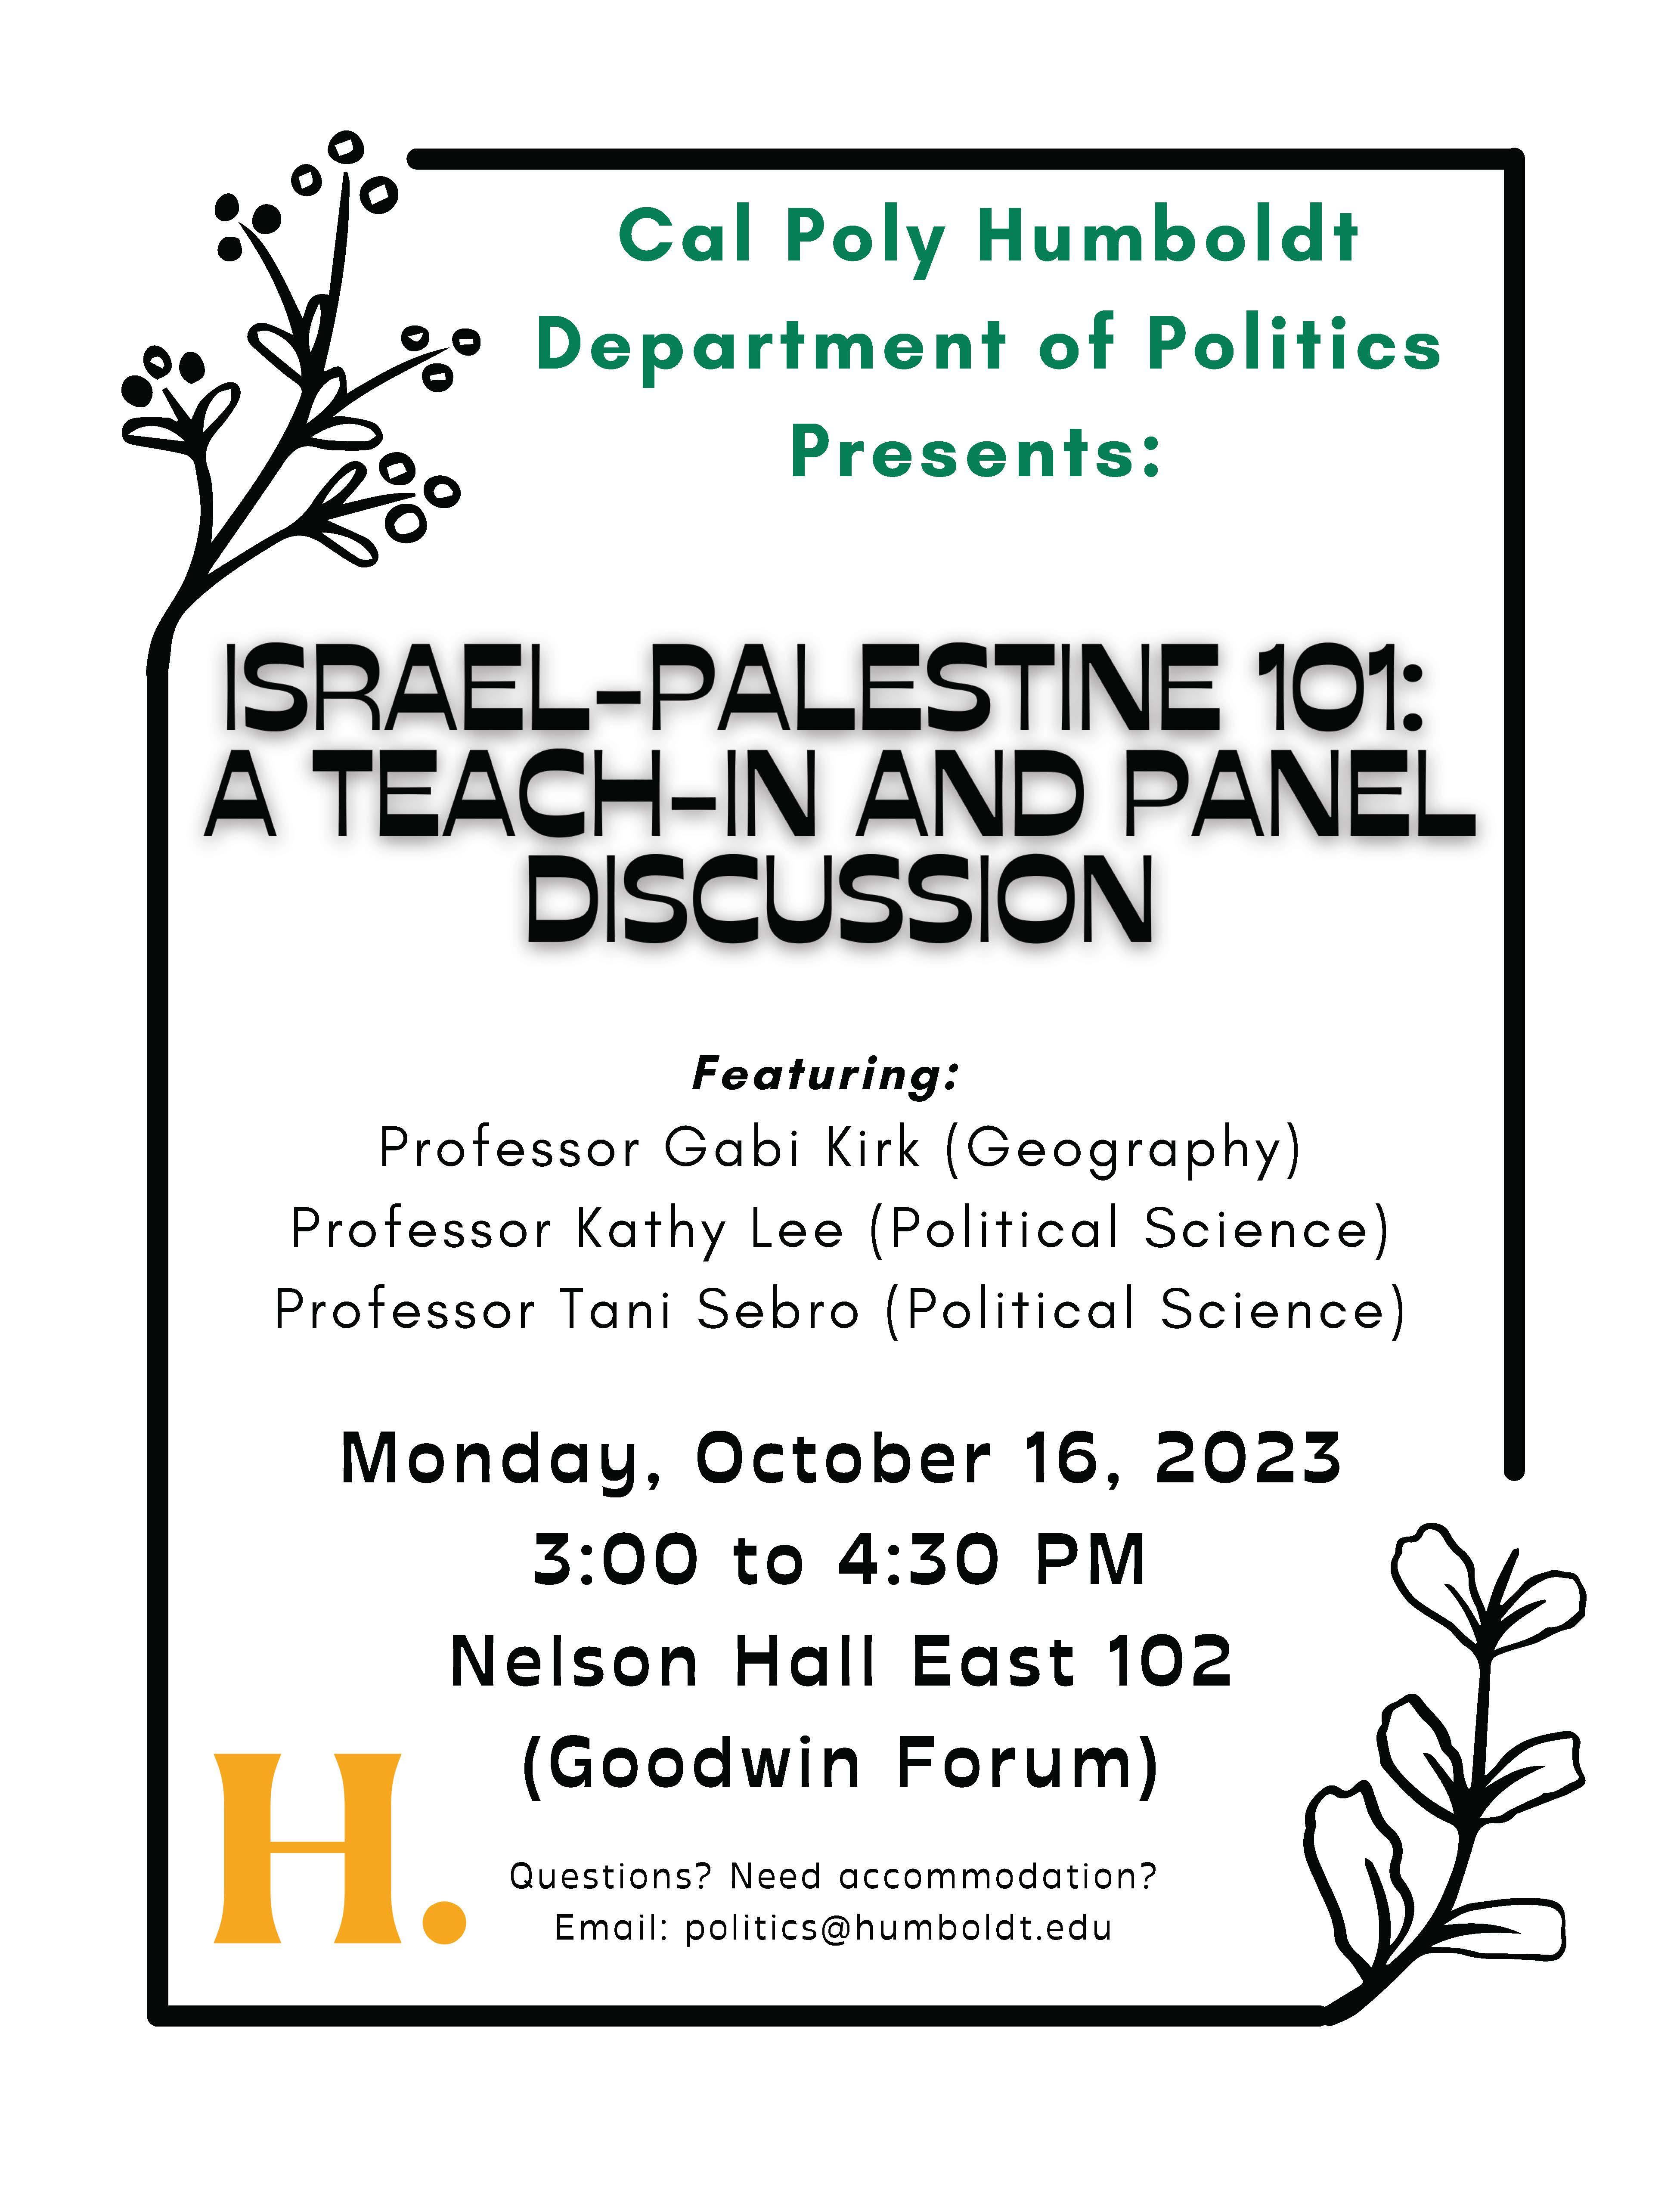 Israel-Palestine 101 teach-in, Oct. 16, 3-4:30pm, NHE 102